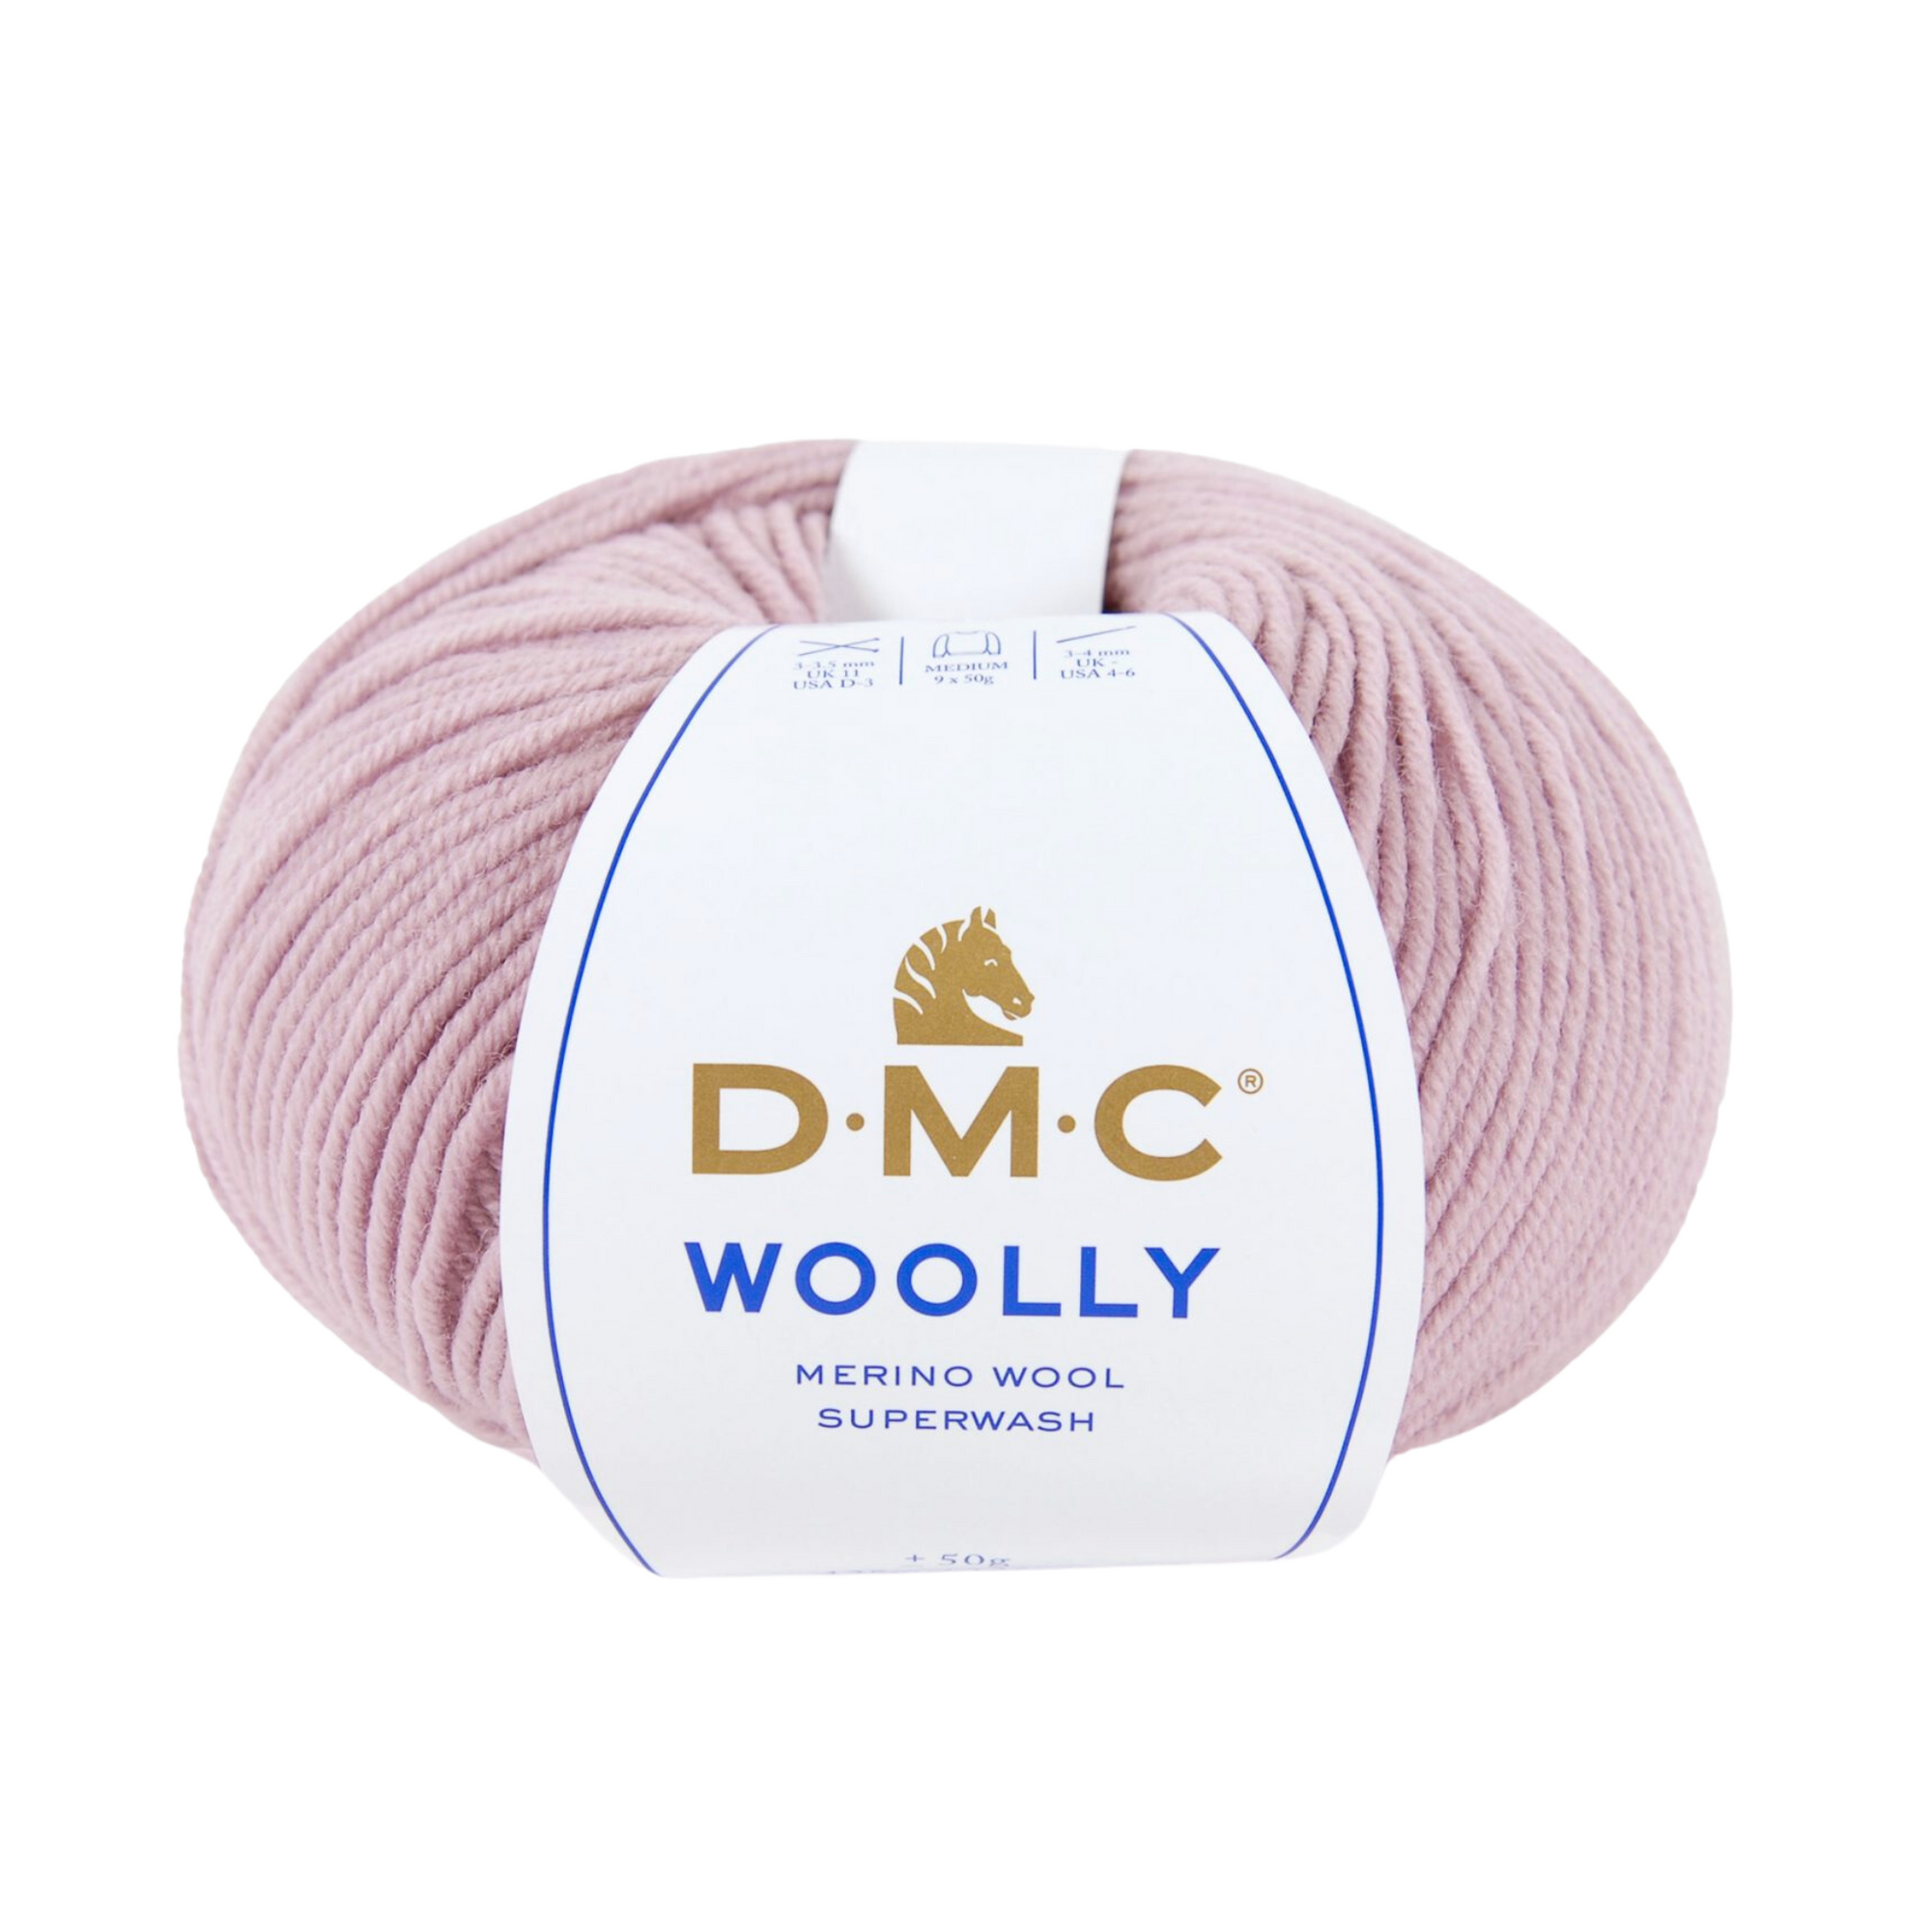 DMC Woolly Yarn, Pure Merino Wool, Pink- 060